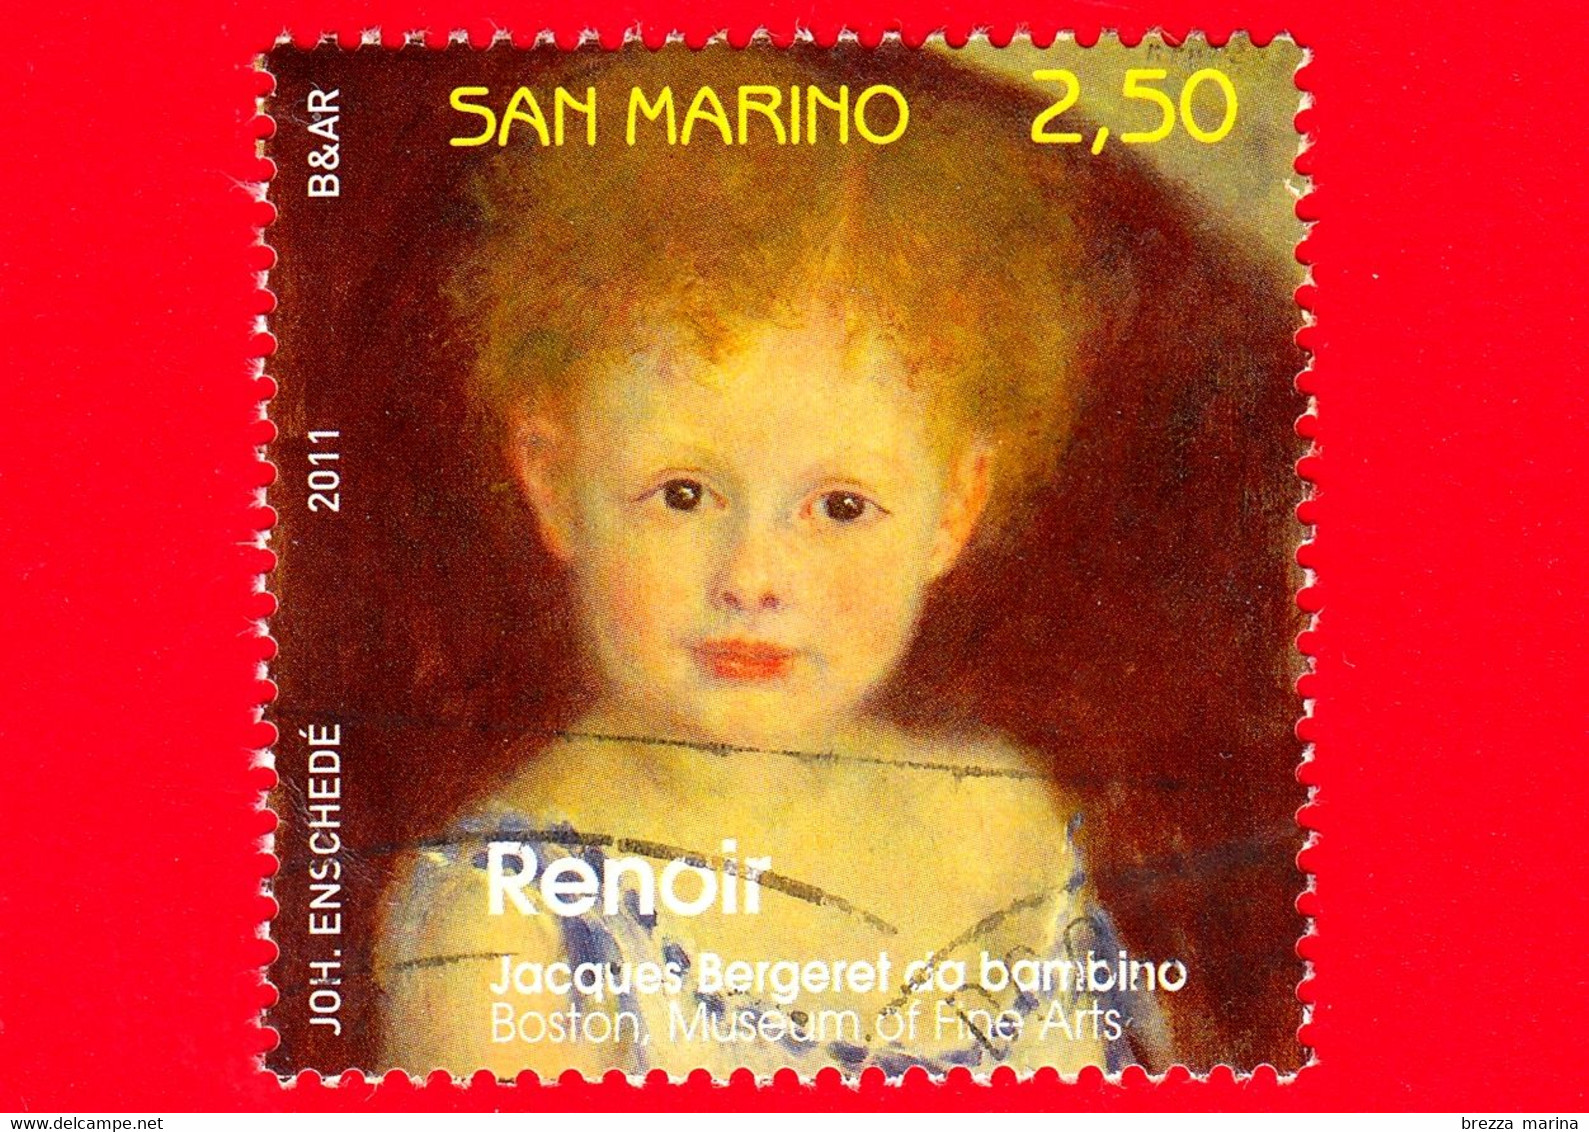 SAN MARINO - Usato - 2011 - Storie Di Pittura In Francia - Renoir - Jacques Bergeret Da Bambino - 2.50 - Used Stamps